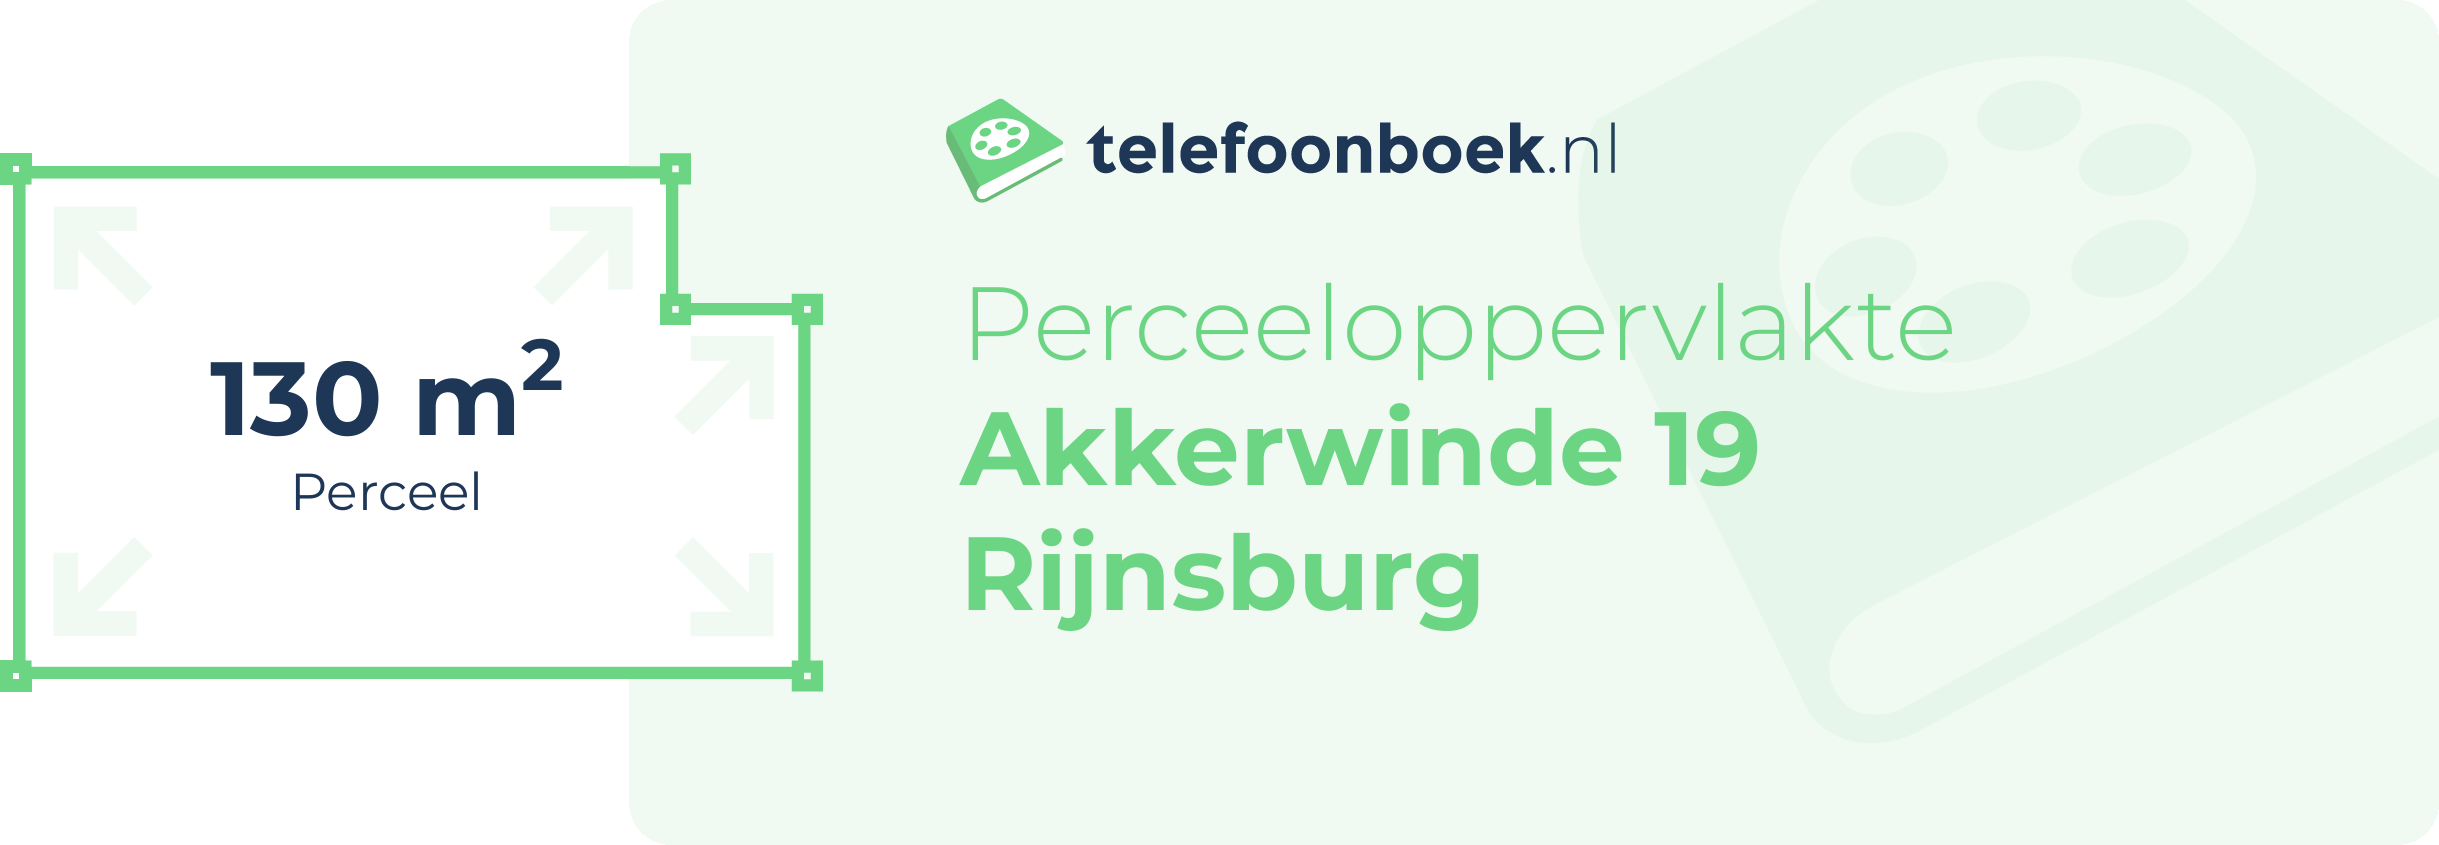 Perceeloppervlakte Akkerwinde 19 Rijnsburg